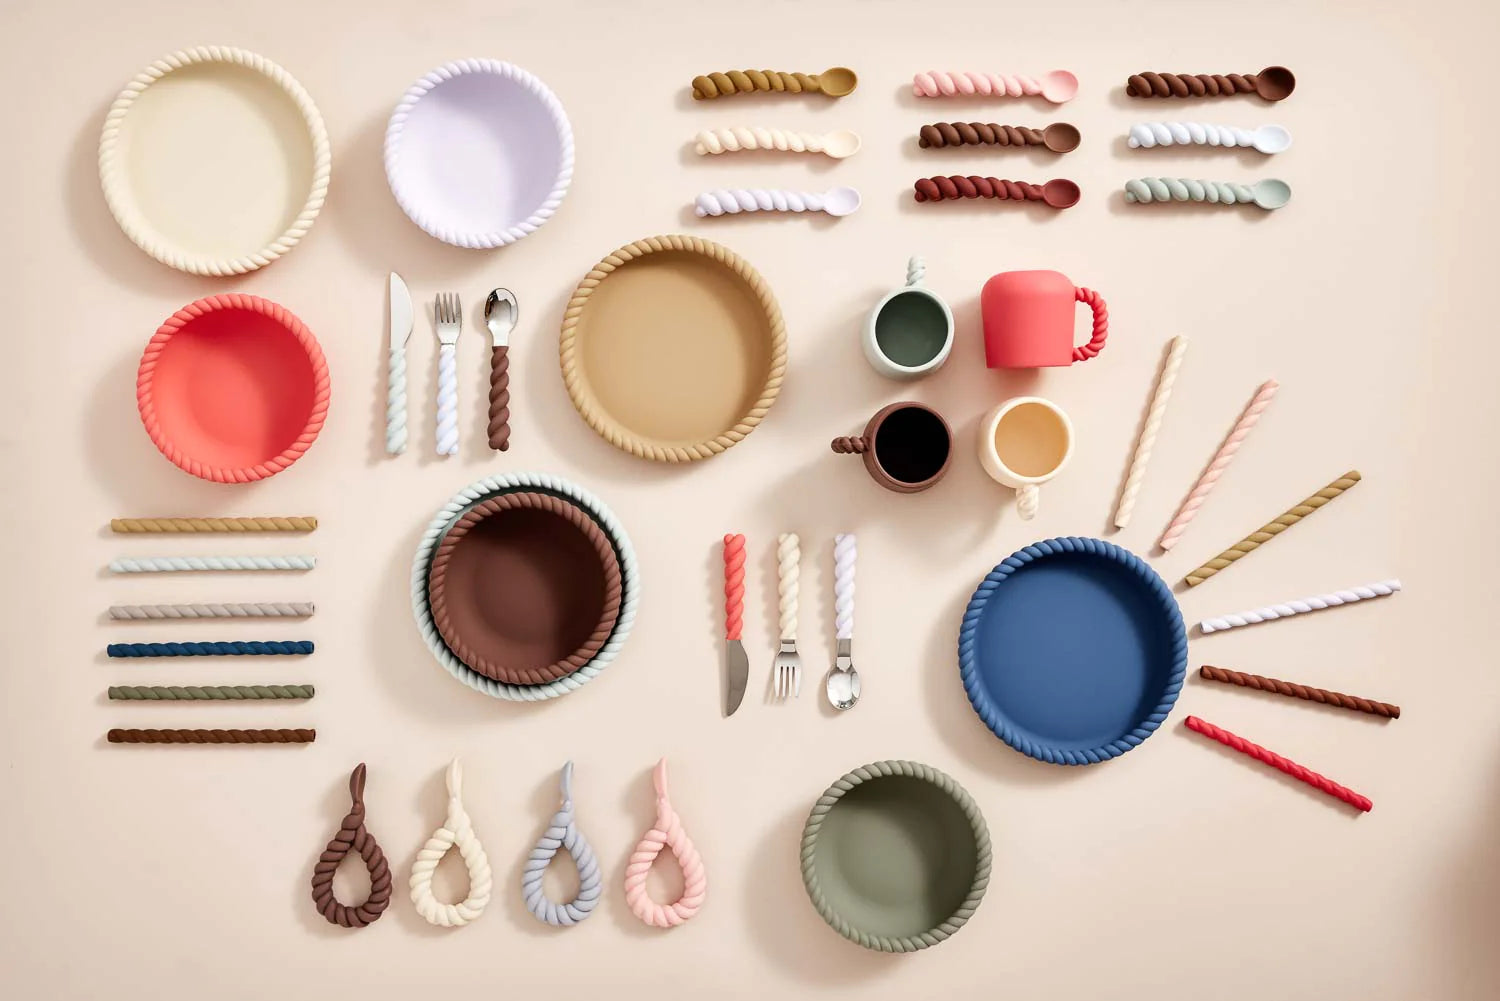 OYOY | Mellow Cutlery Set 3pk - Lavender, Vanilla & Cherry Red